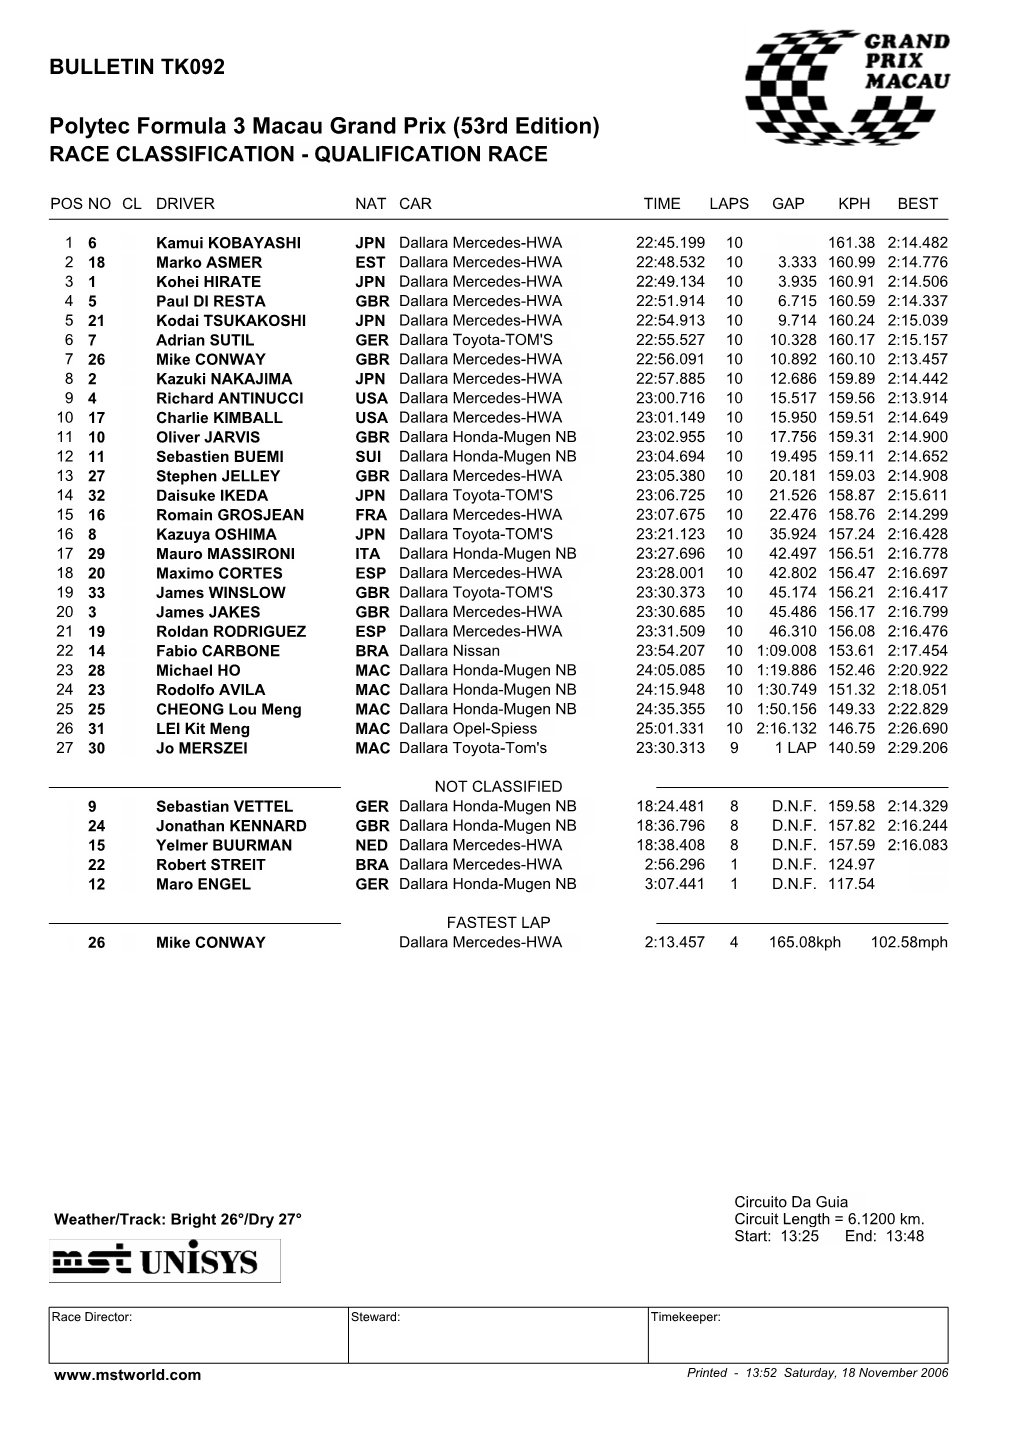 Polytec Formula 3 Macau Grand Prix (53Rd Edition) RACE CLASSIFICATION - QUALIFICATION RACE